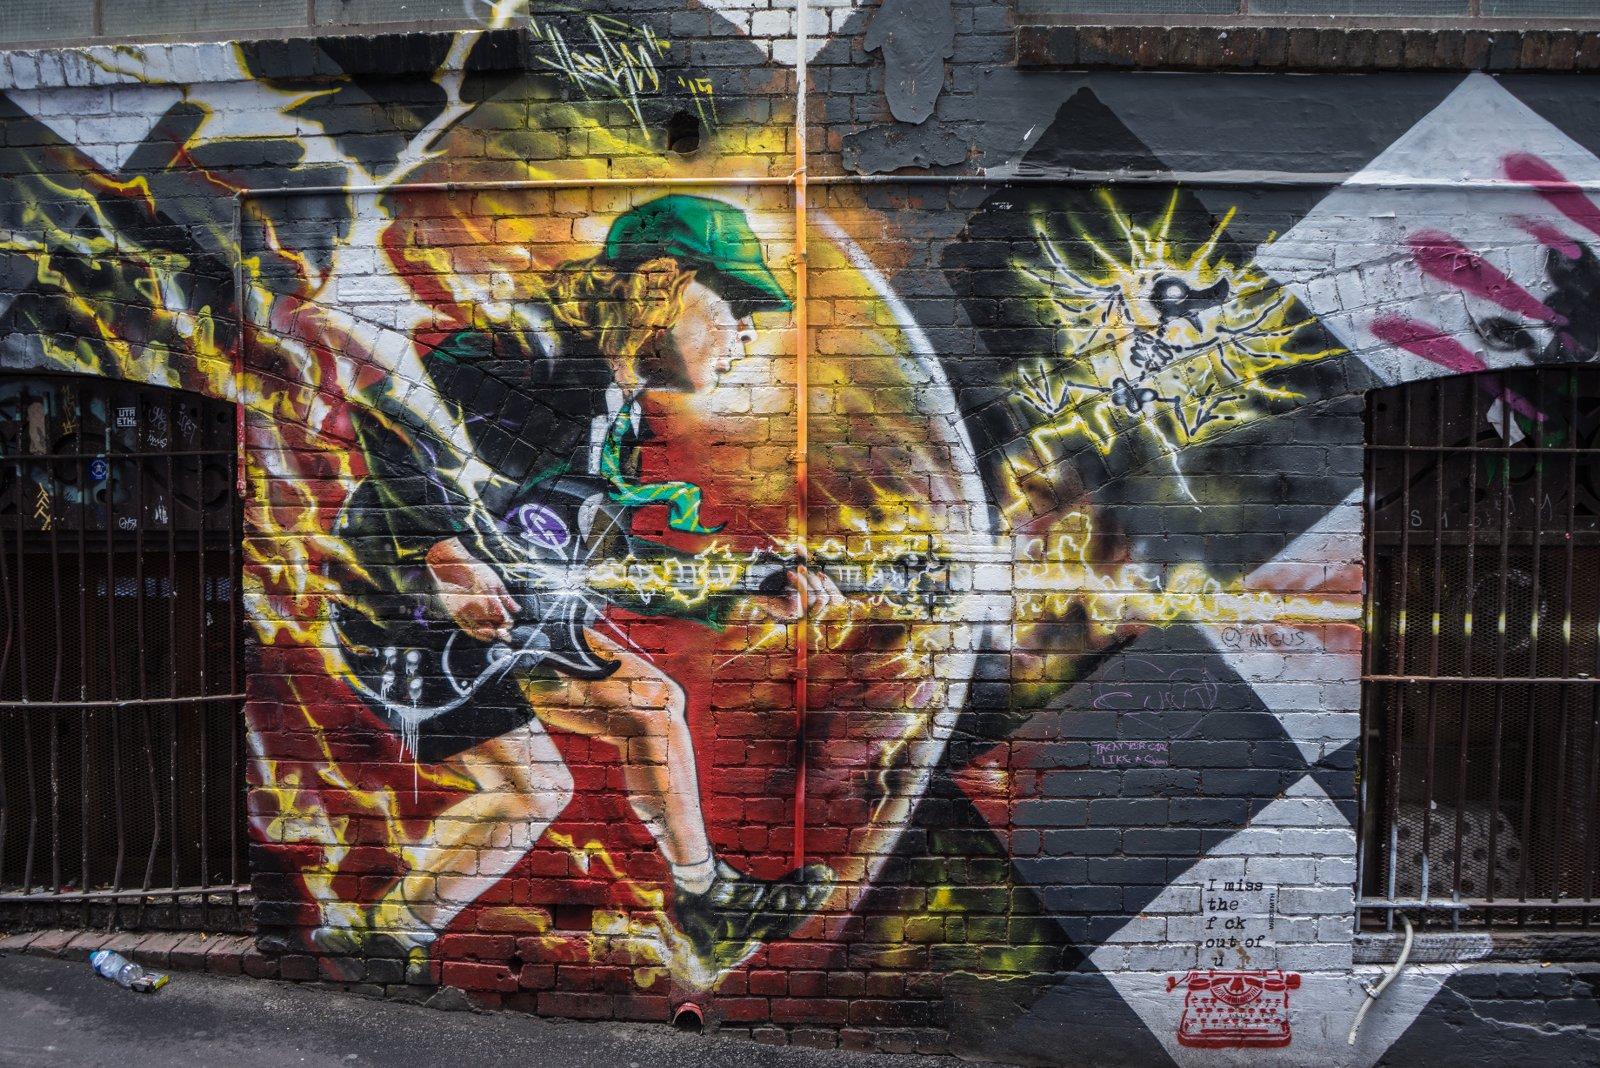 AC/DC Lane гудамжний графит урлал